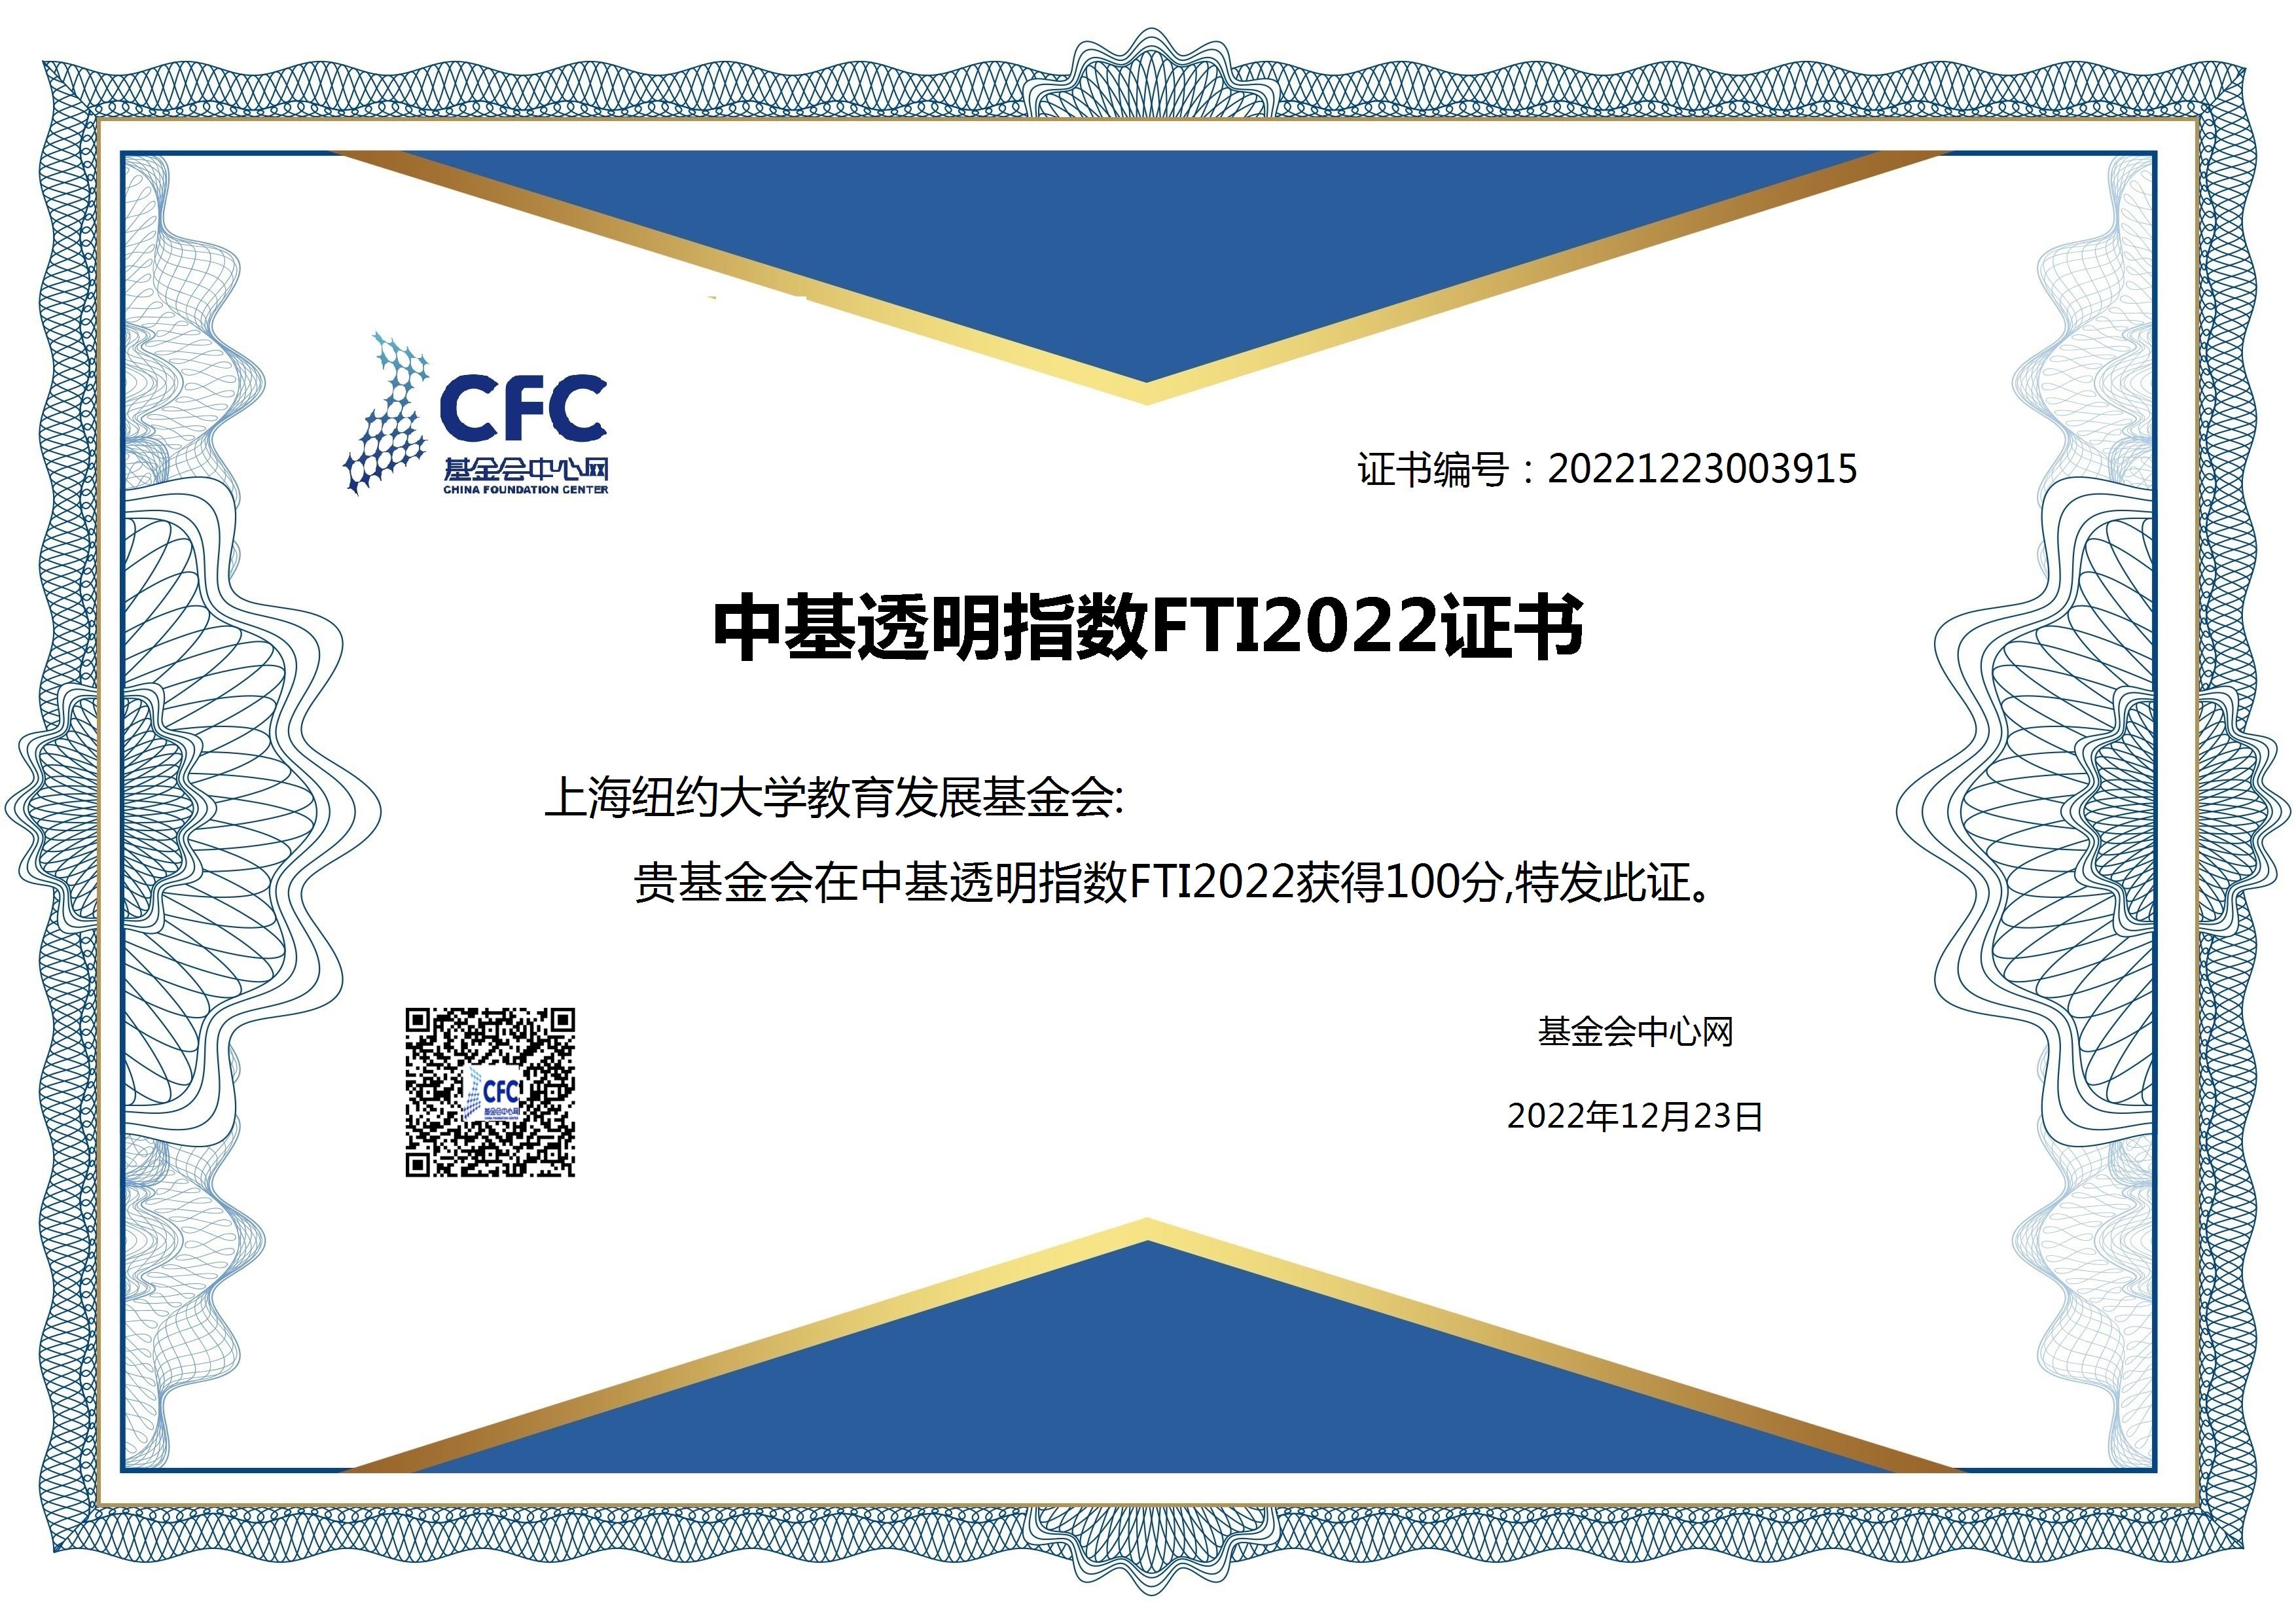 中基透明指数满分证书 China Foundation Transparency Index Full-score Certificate